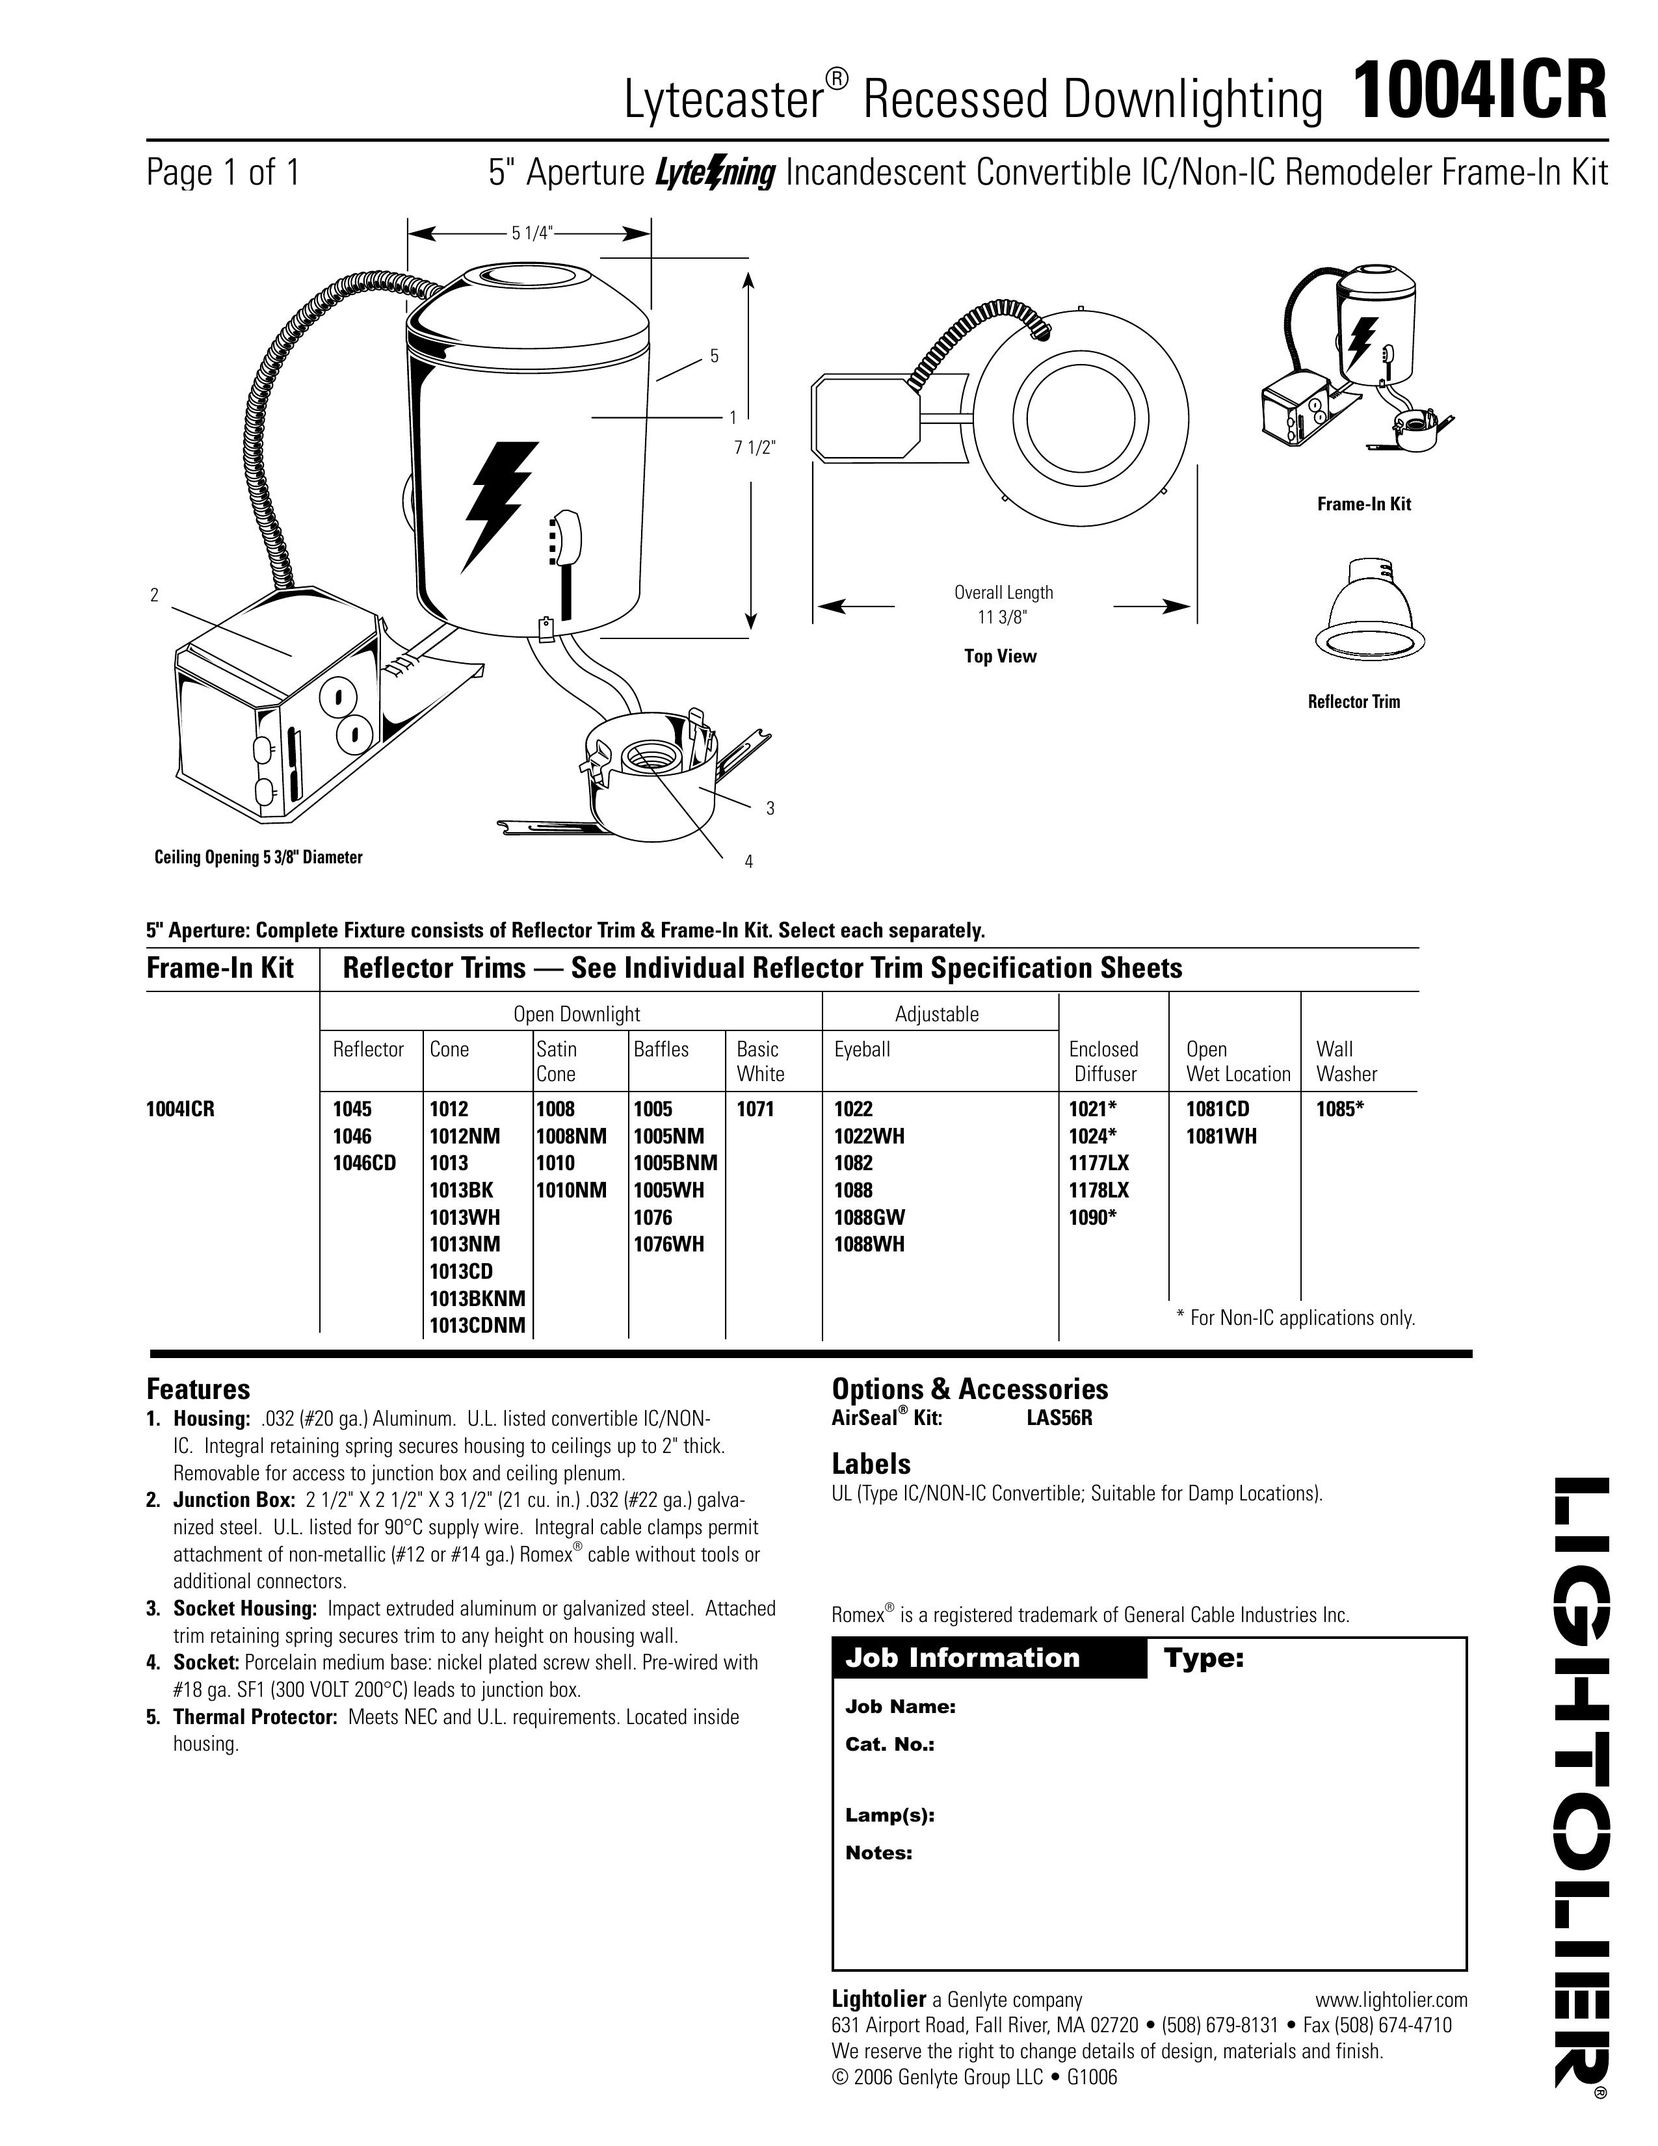 Lightolier 1004ICR Indoor Furnishings User Manual